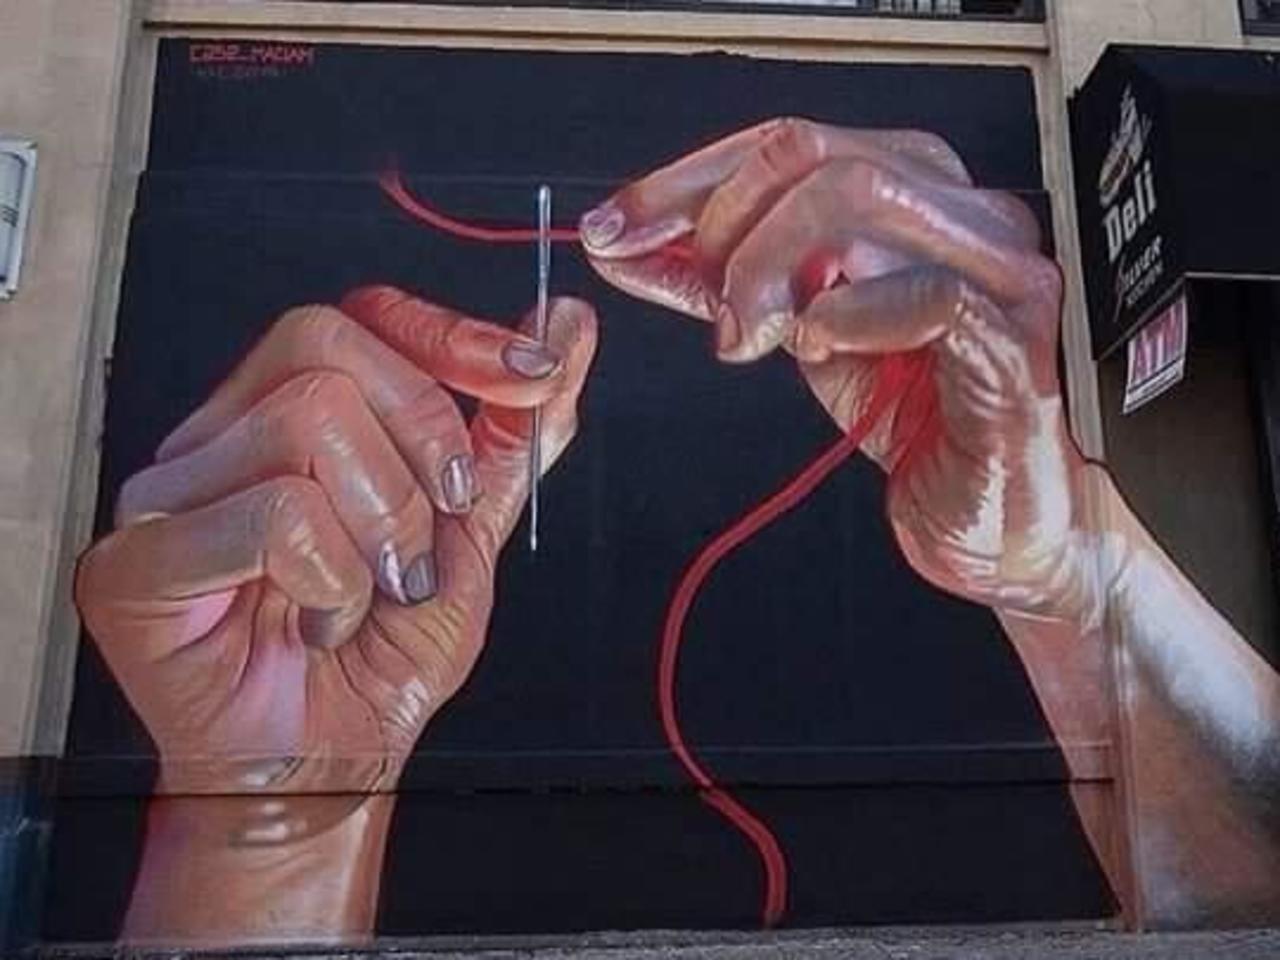 RT @hypatia373: #art #streetart #graffiti 
#CaseMaclaim https://t.co/z1wjT0bLV0